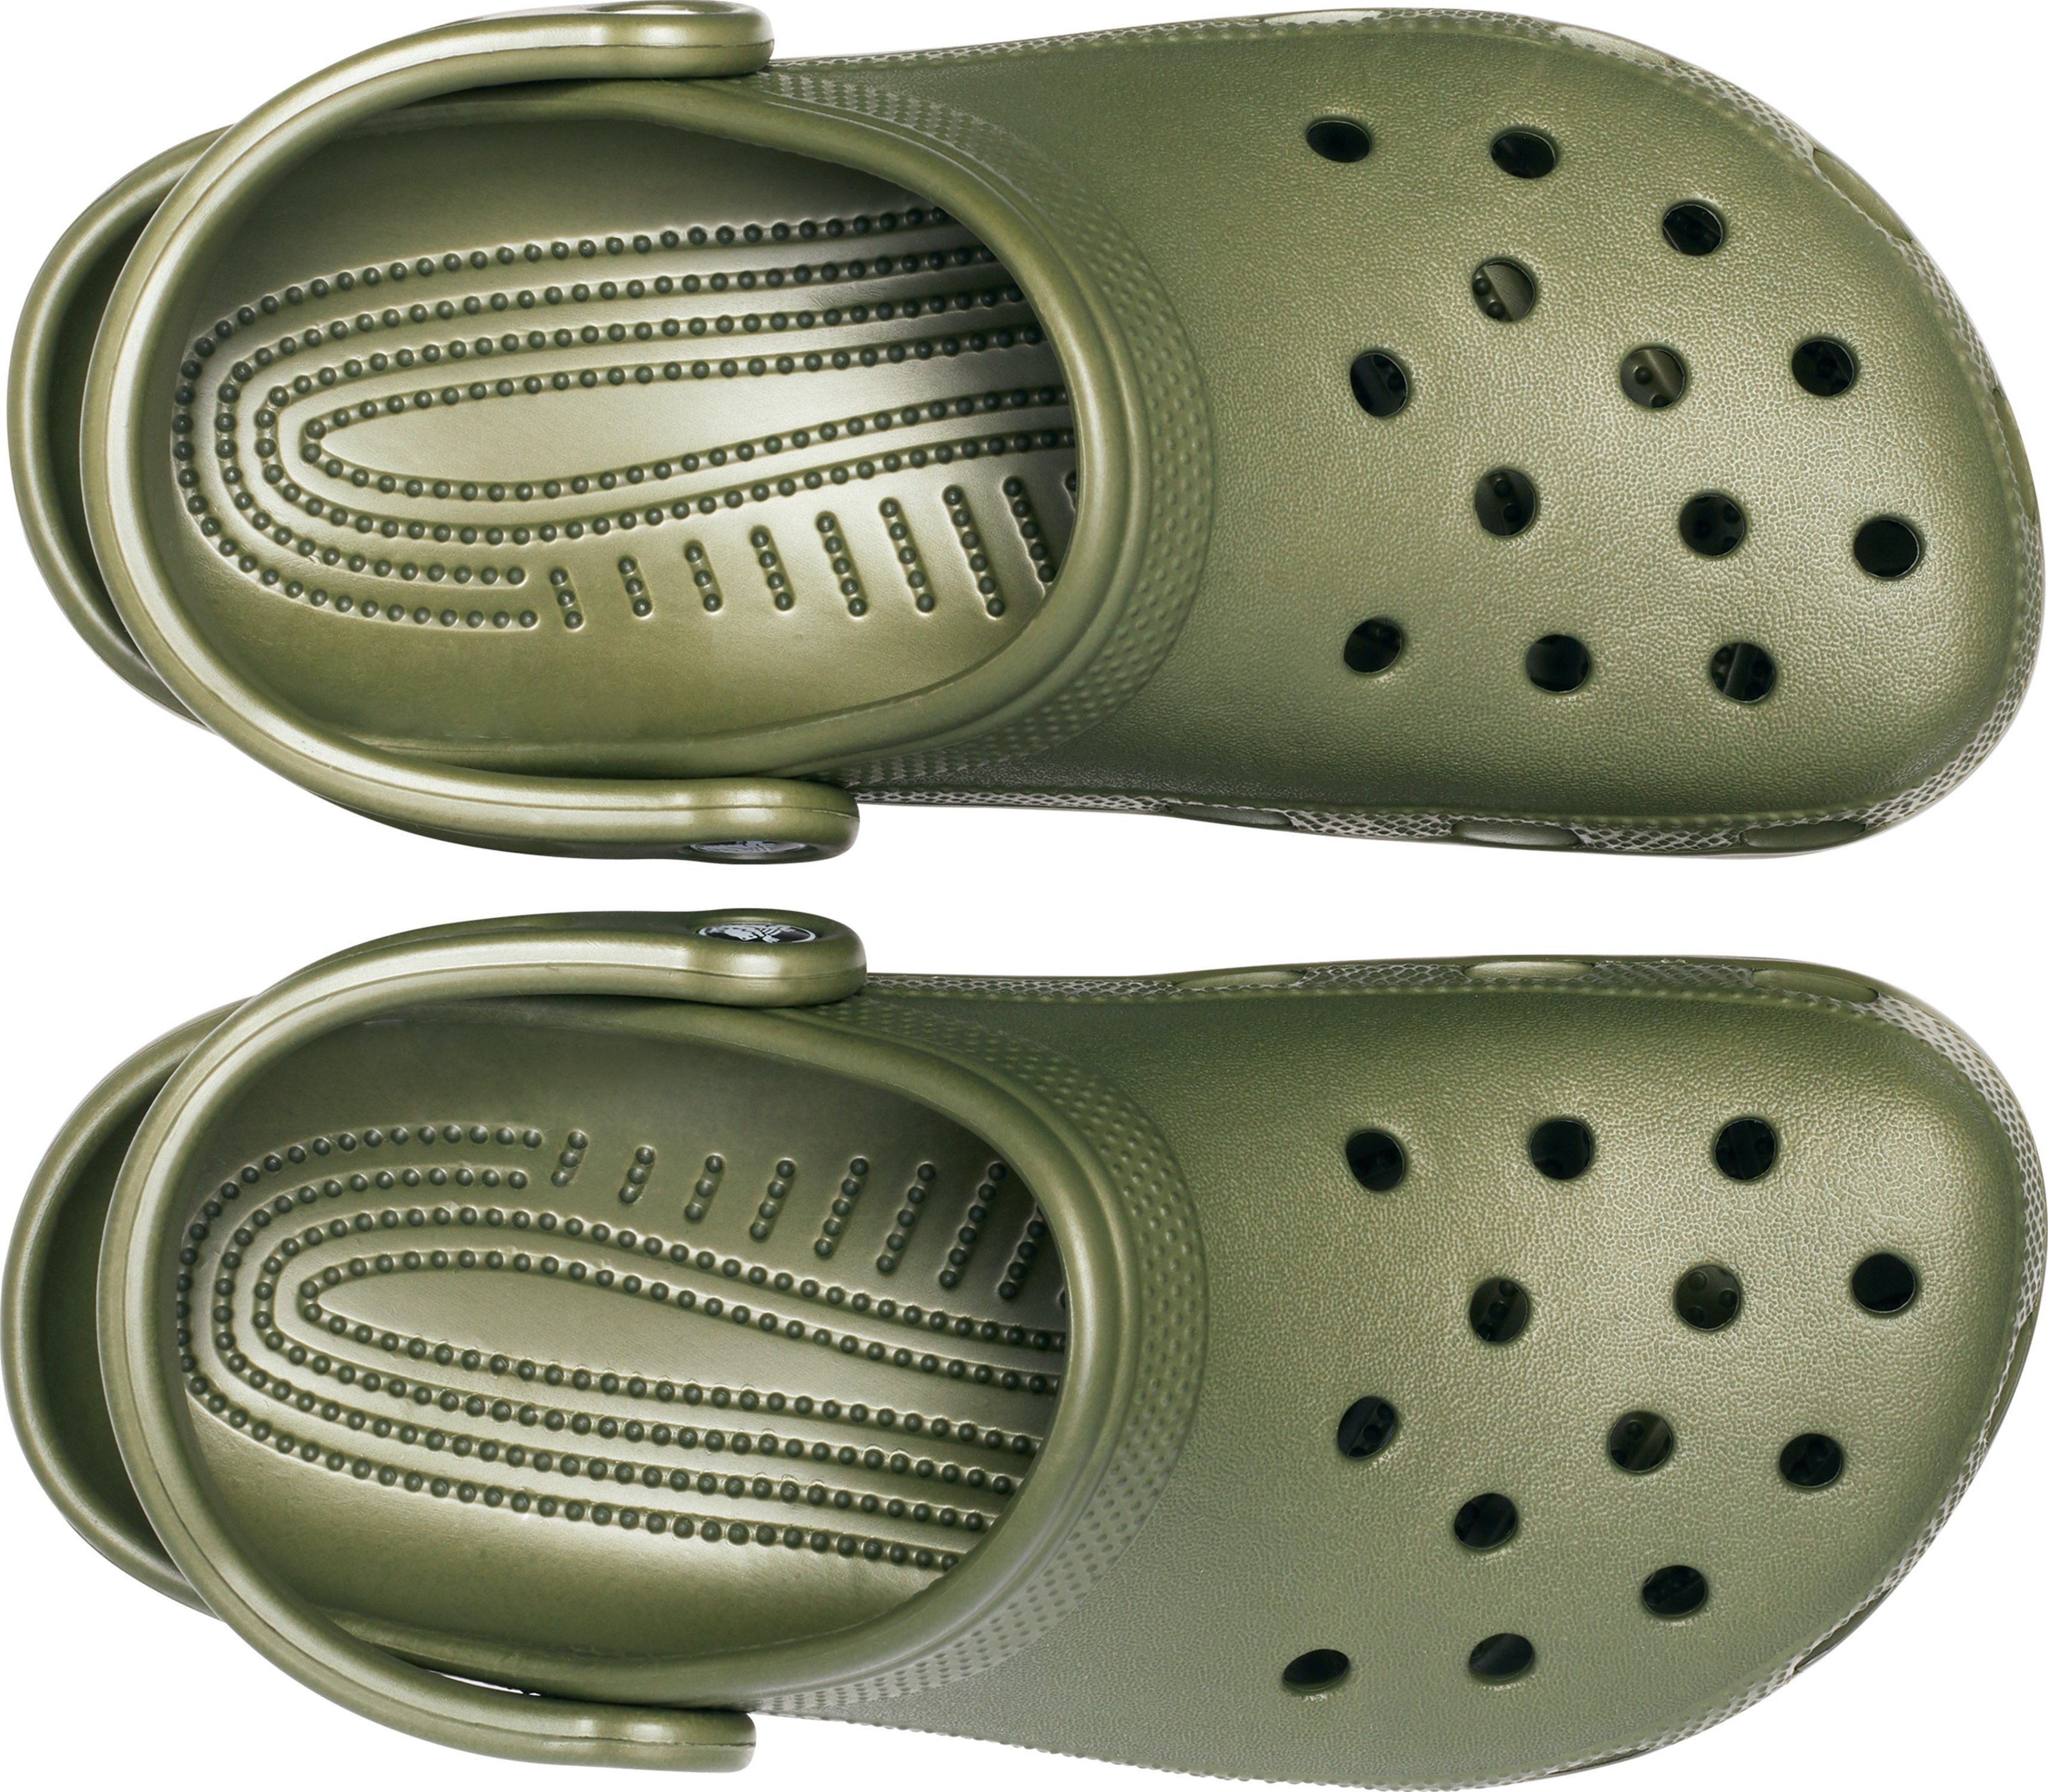 Crocs Classic mit typischem khaki Clog Logo